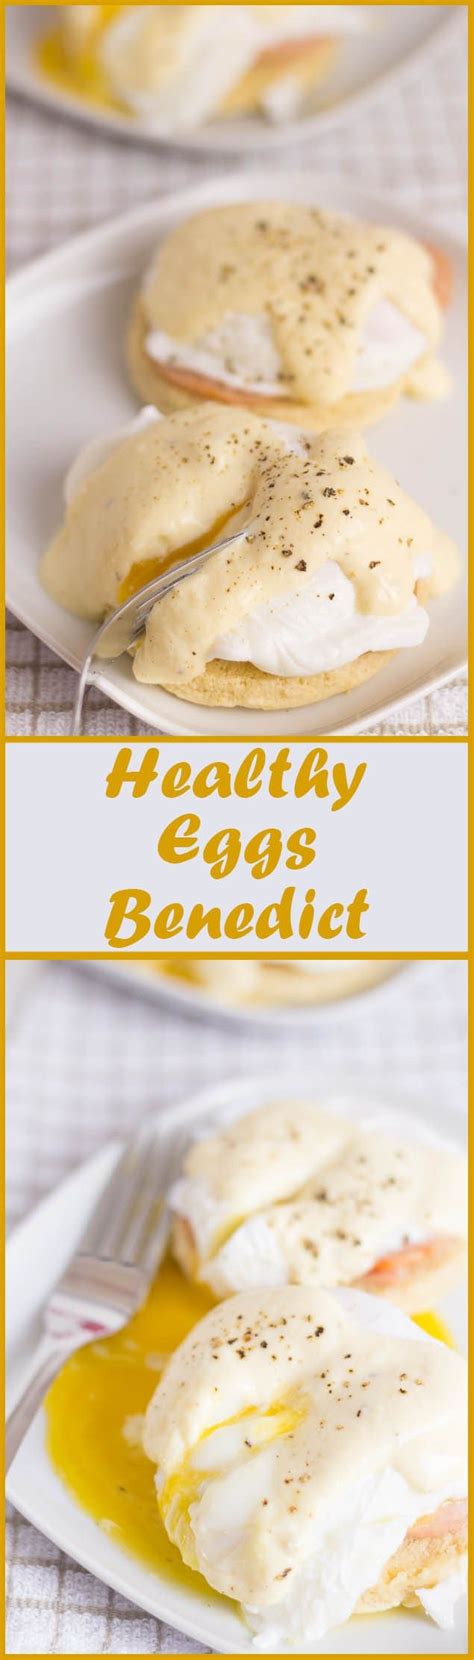 Healthy Eggs Benedict Recipe Brunch Recipes Eggs Benedict Healthy